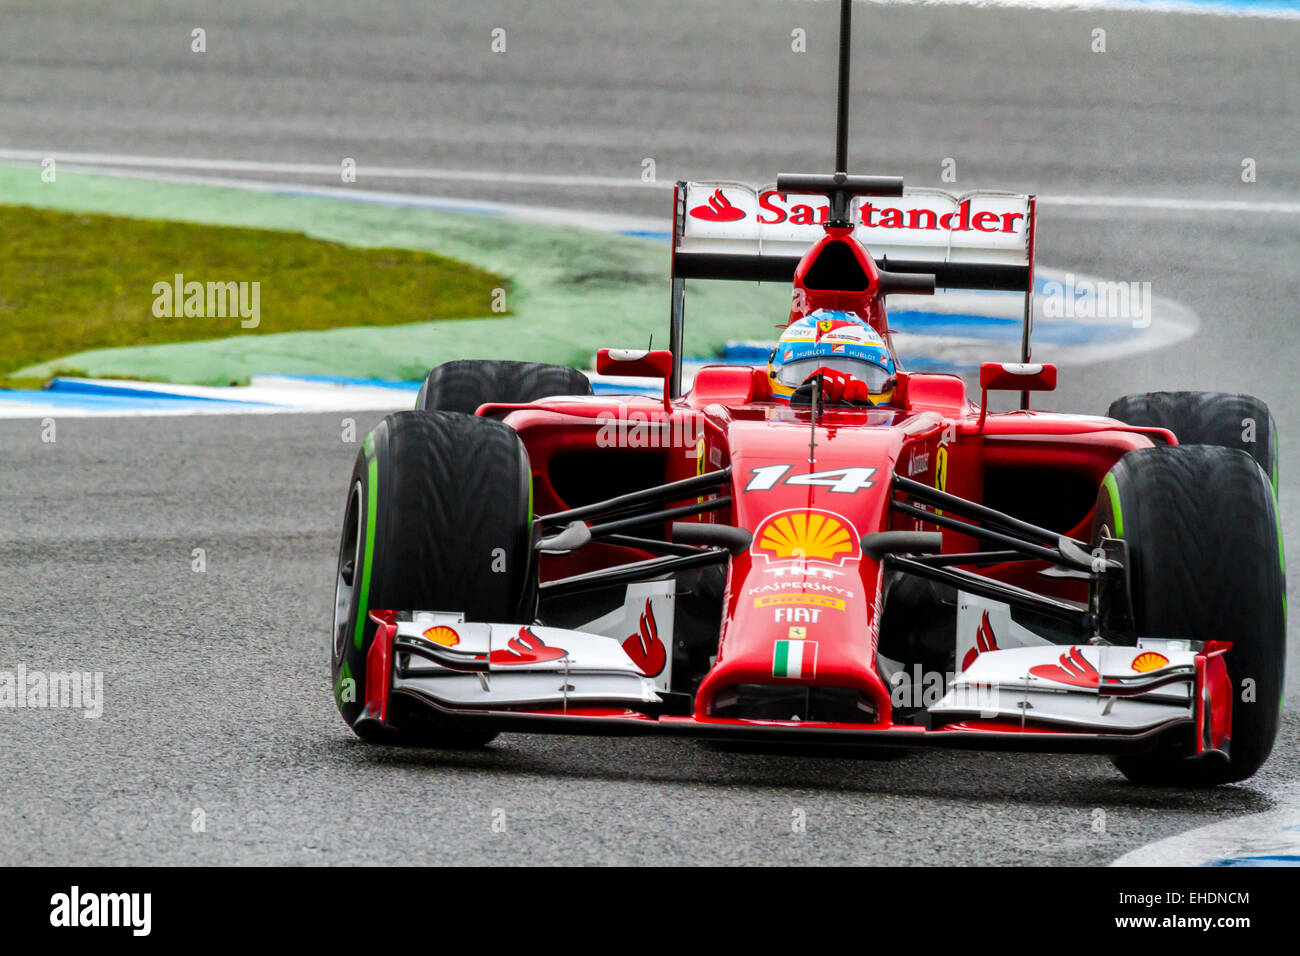 Fernando Alonso of Scuderia Ferrari F1 races on training session Stock Photo